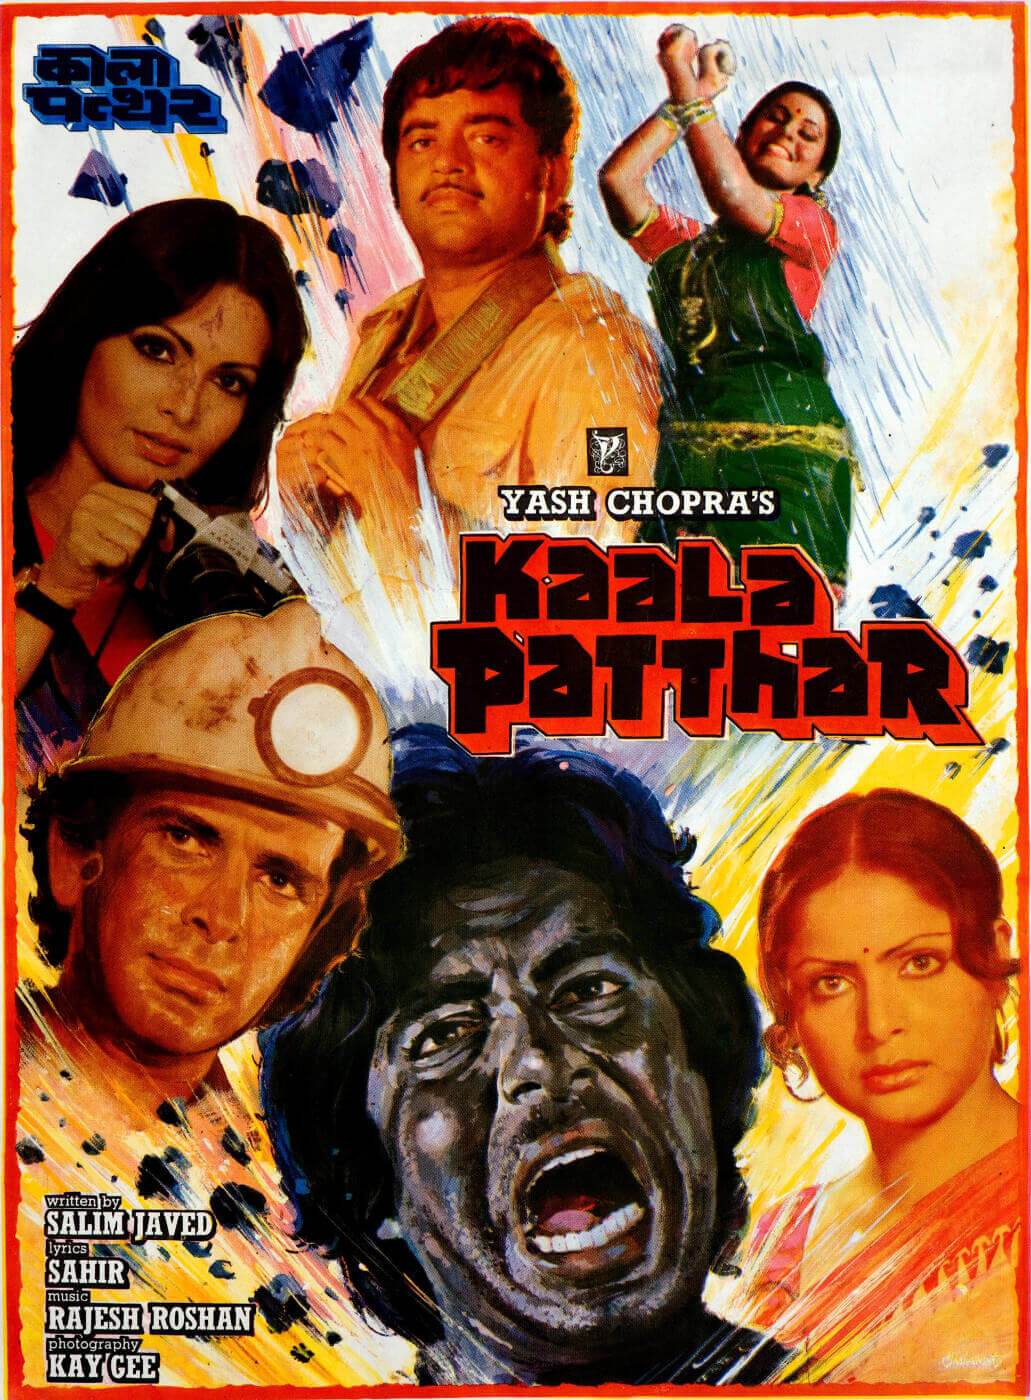 kaala-patthar-1979-4152-poster.jpg